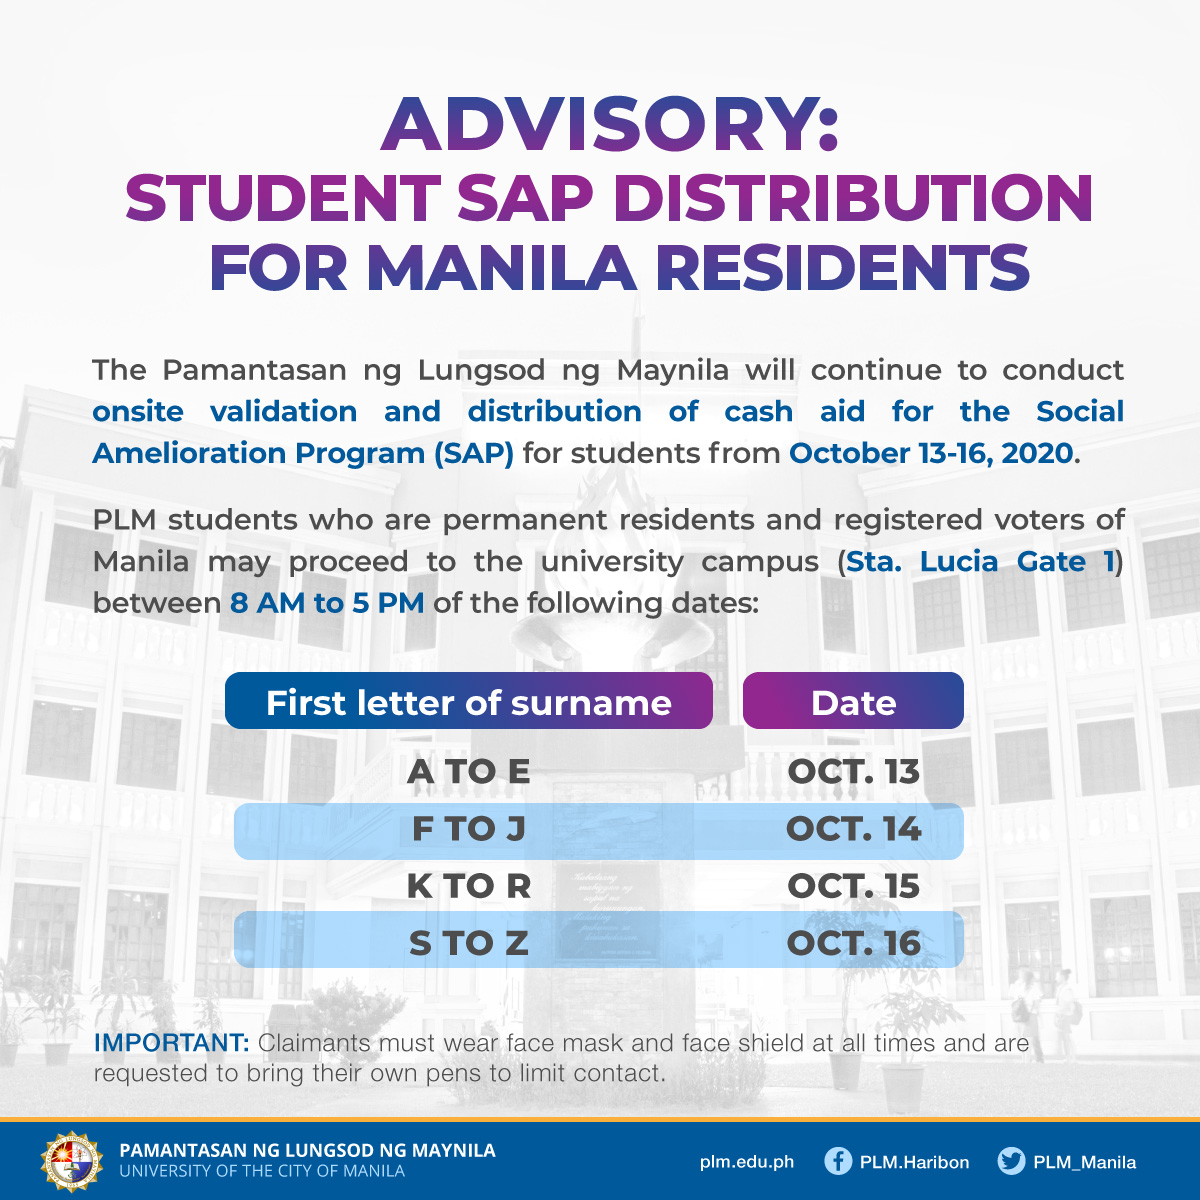 Advisory on student SAP distribution for Manila residents